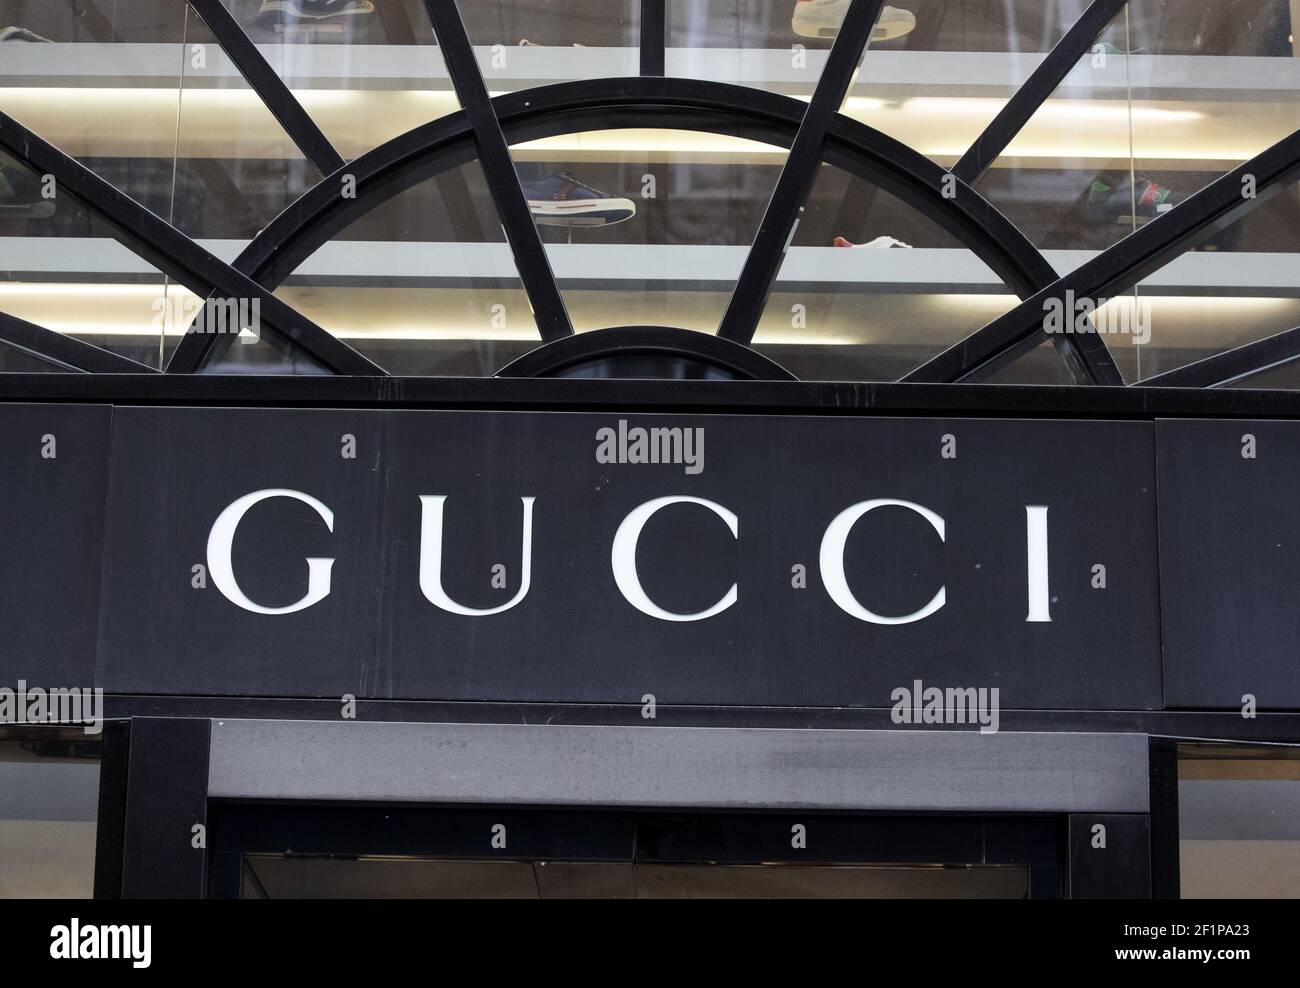 medaillewinnaar katoen hebben zich vergist Kiev, Ukraine. 6th Mar, 2021. Gucci logo of a luxury fashion house seen  over the entrance